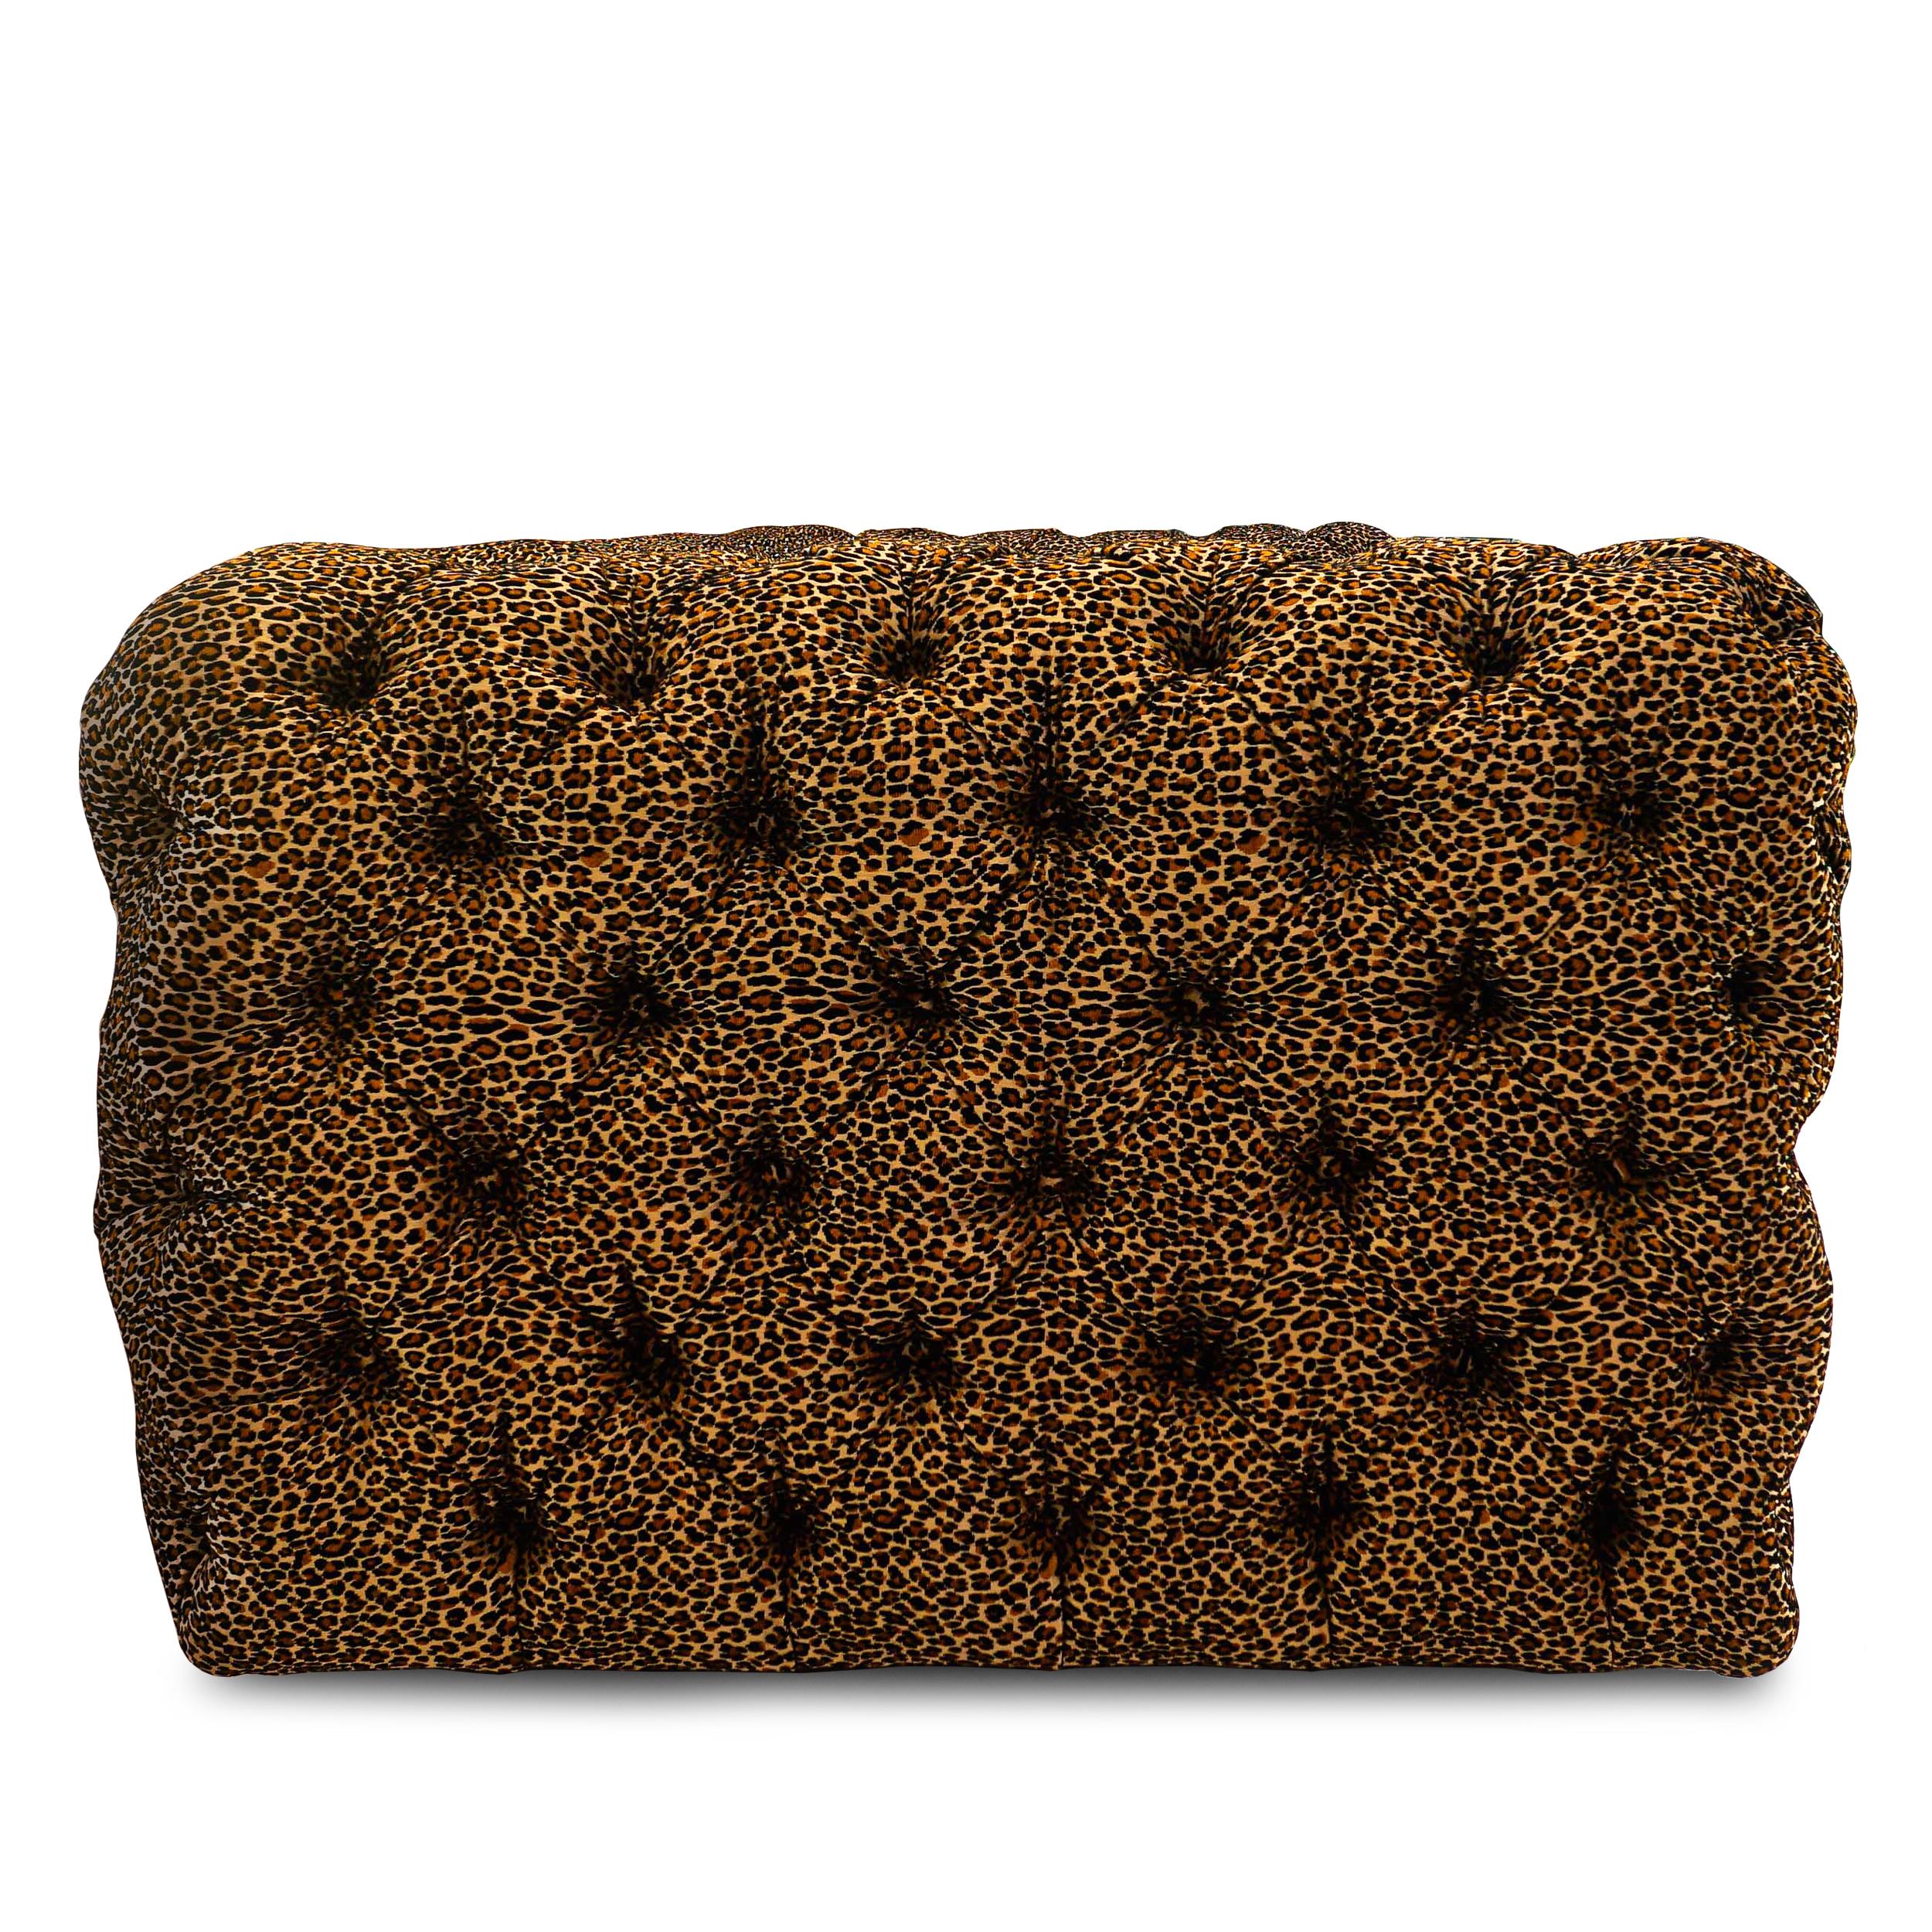 Cotton Tufted Leopard Print Sofa For Sale